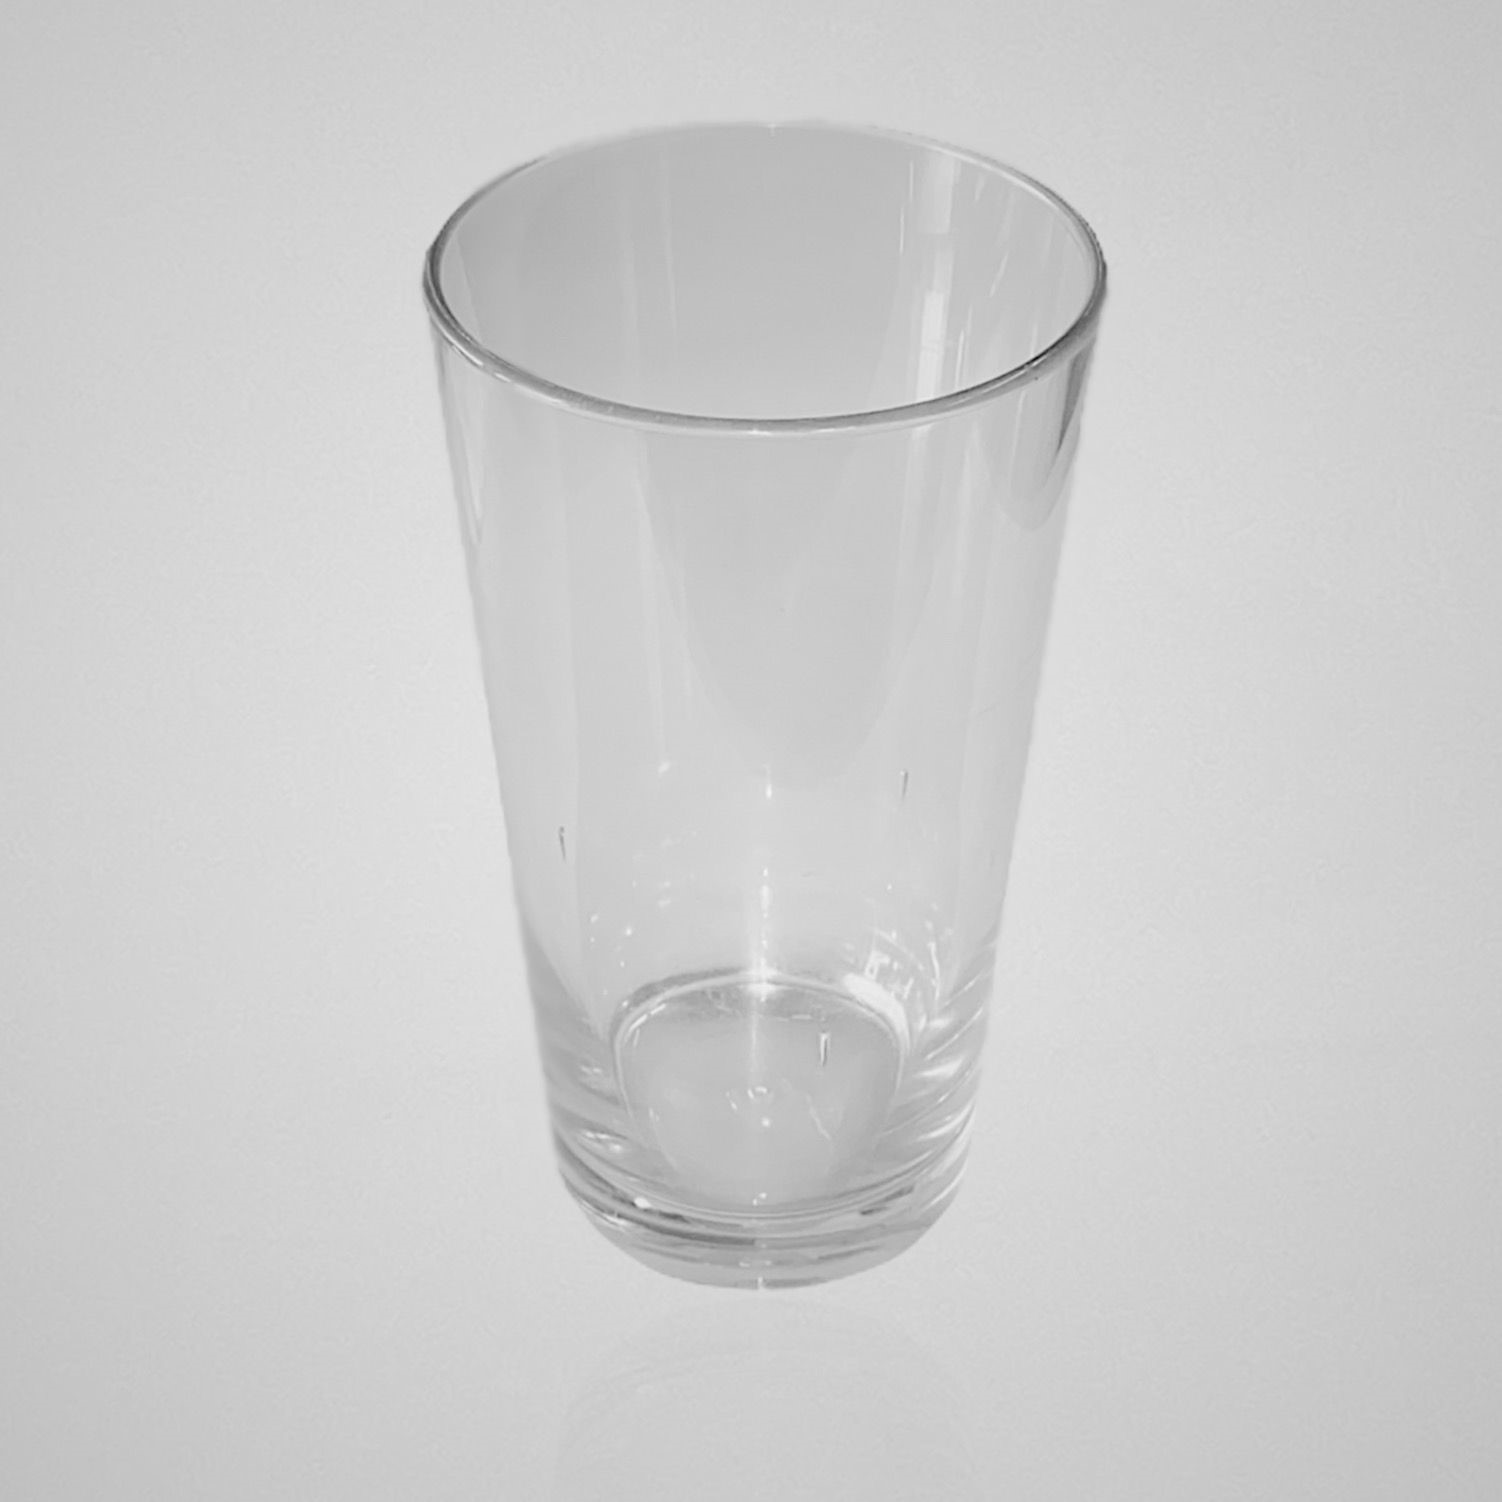 Ringo GLASS 450ml transparent round